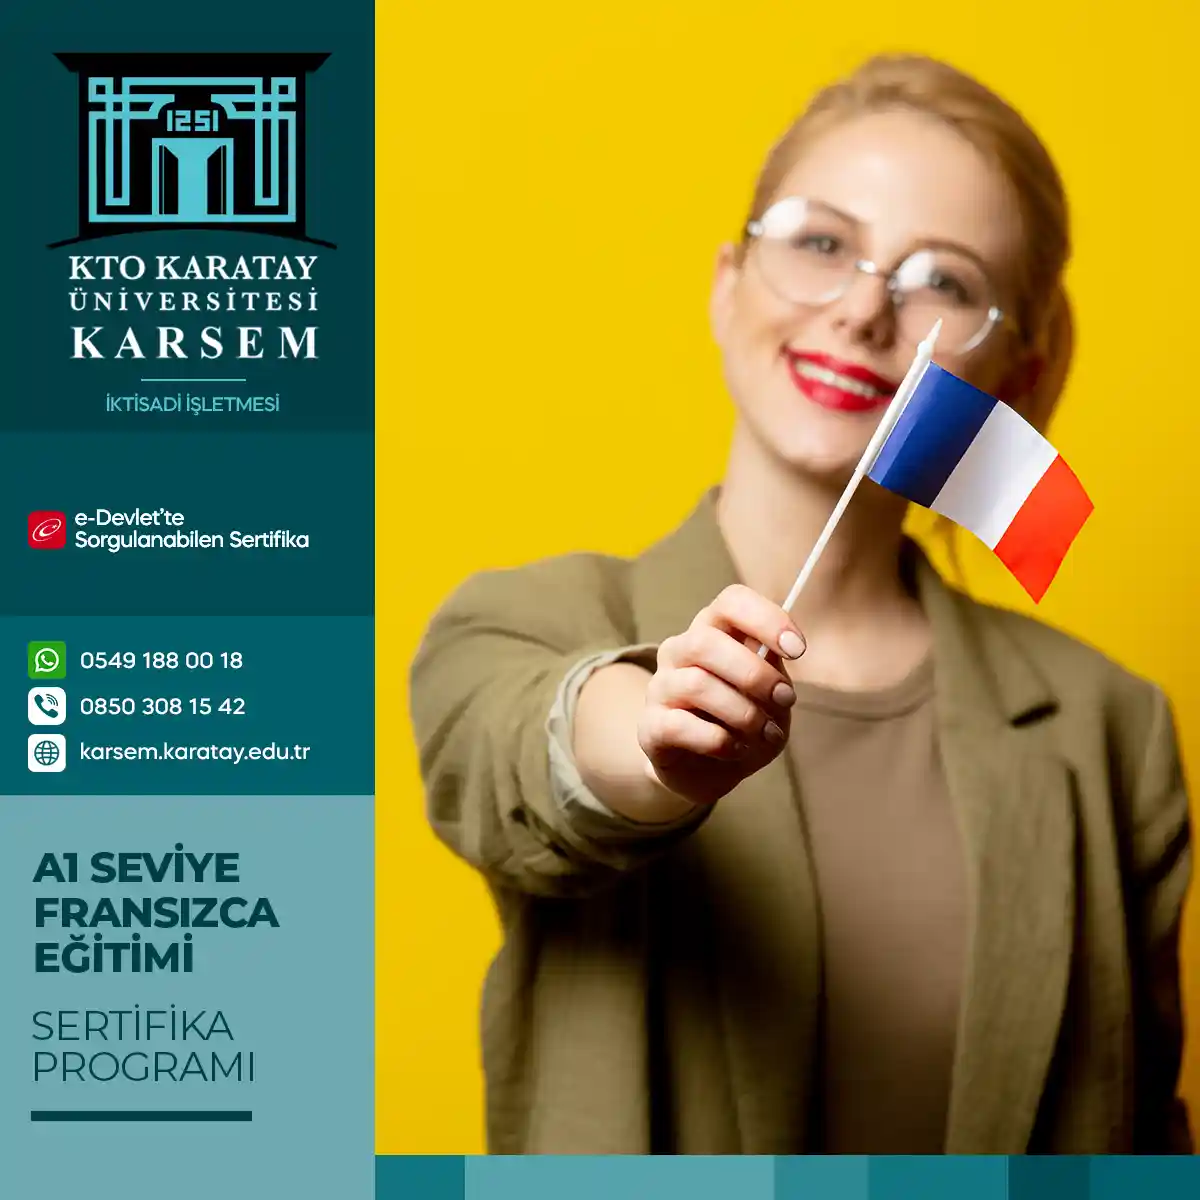 A1 Seviye Fransızca Eğitimi Sertifika Programı